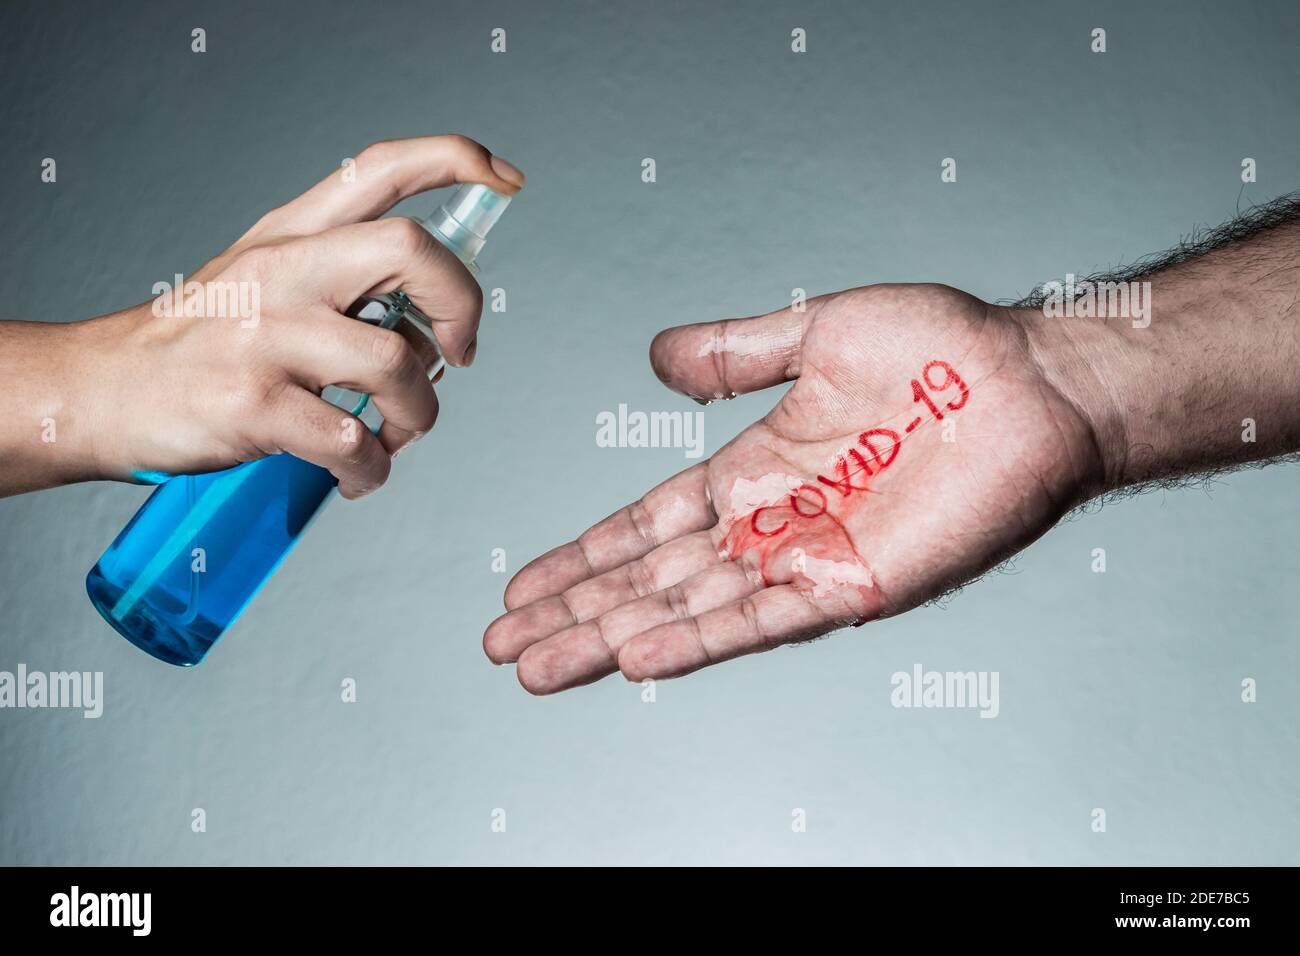 Woman spraying disinfectant into man's hand. Covid-19, Coronavirus, SARS-CoV-2 outbreak. 2019 - 2020 Novel Coronavirus concept and background. Stock Photo